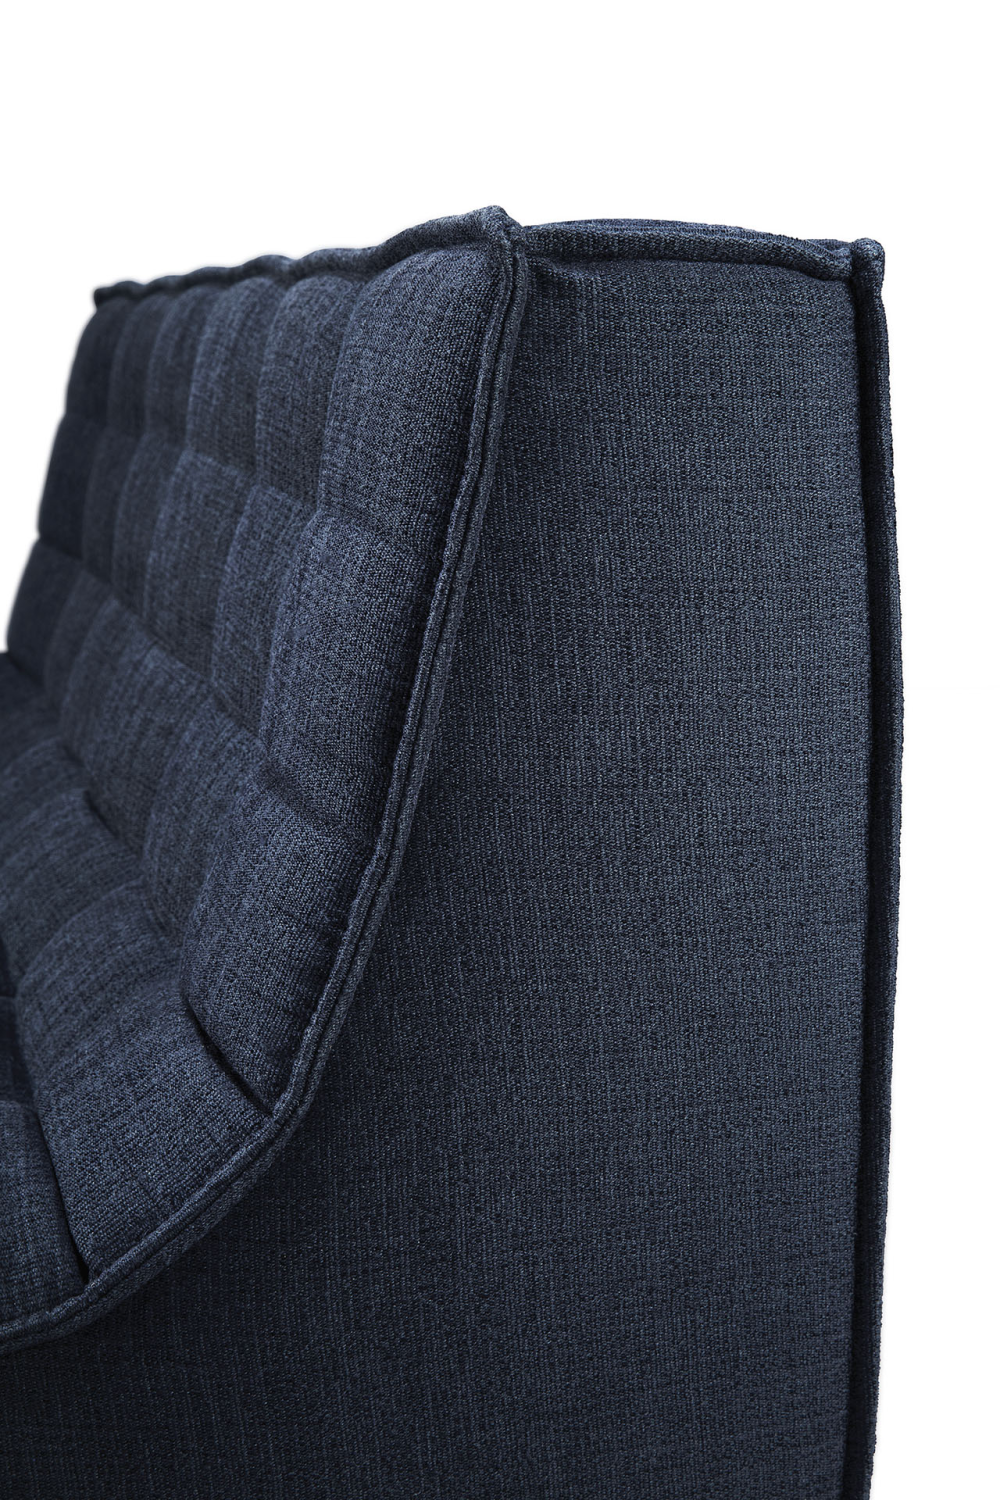 Blue Fabric Upholstered Sofa | Ethnicraft N701 | Oroa.com